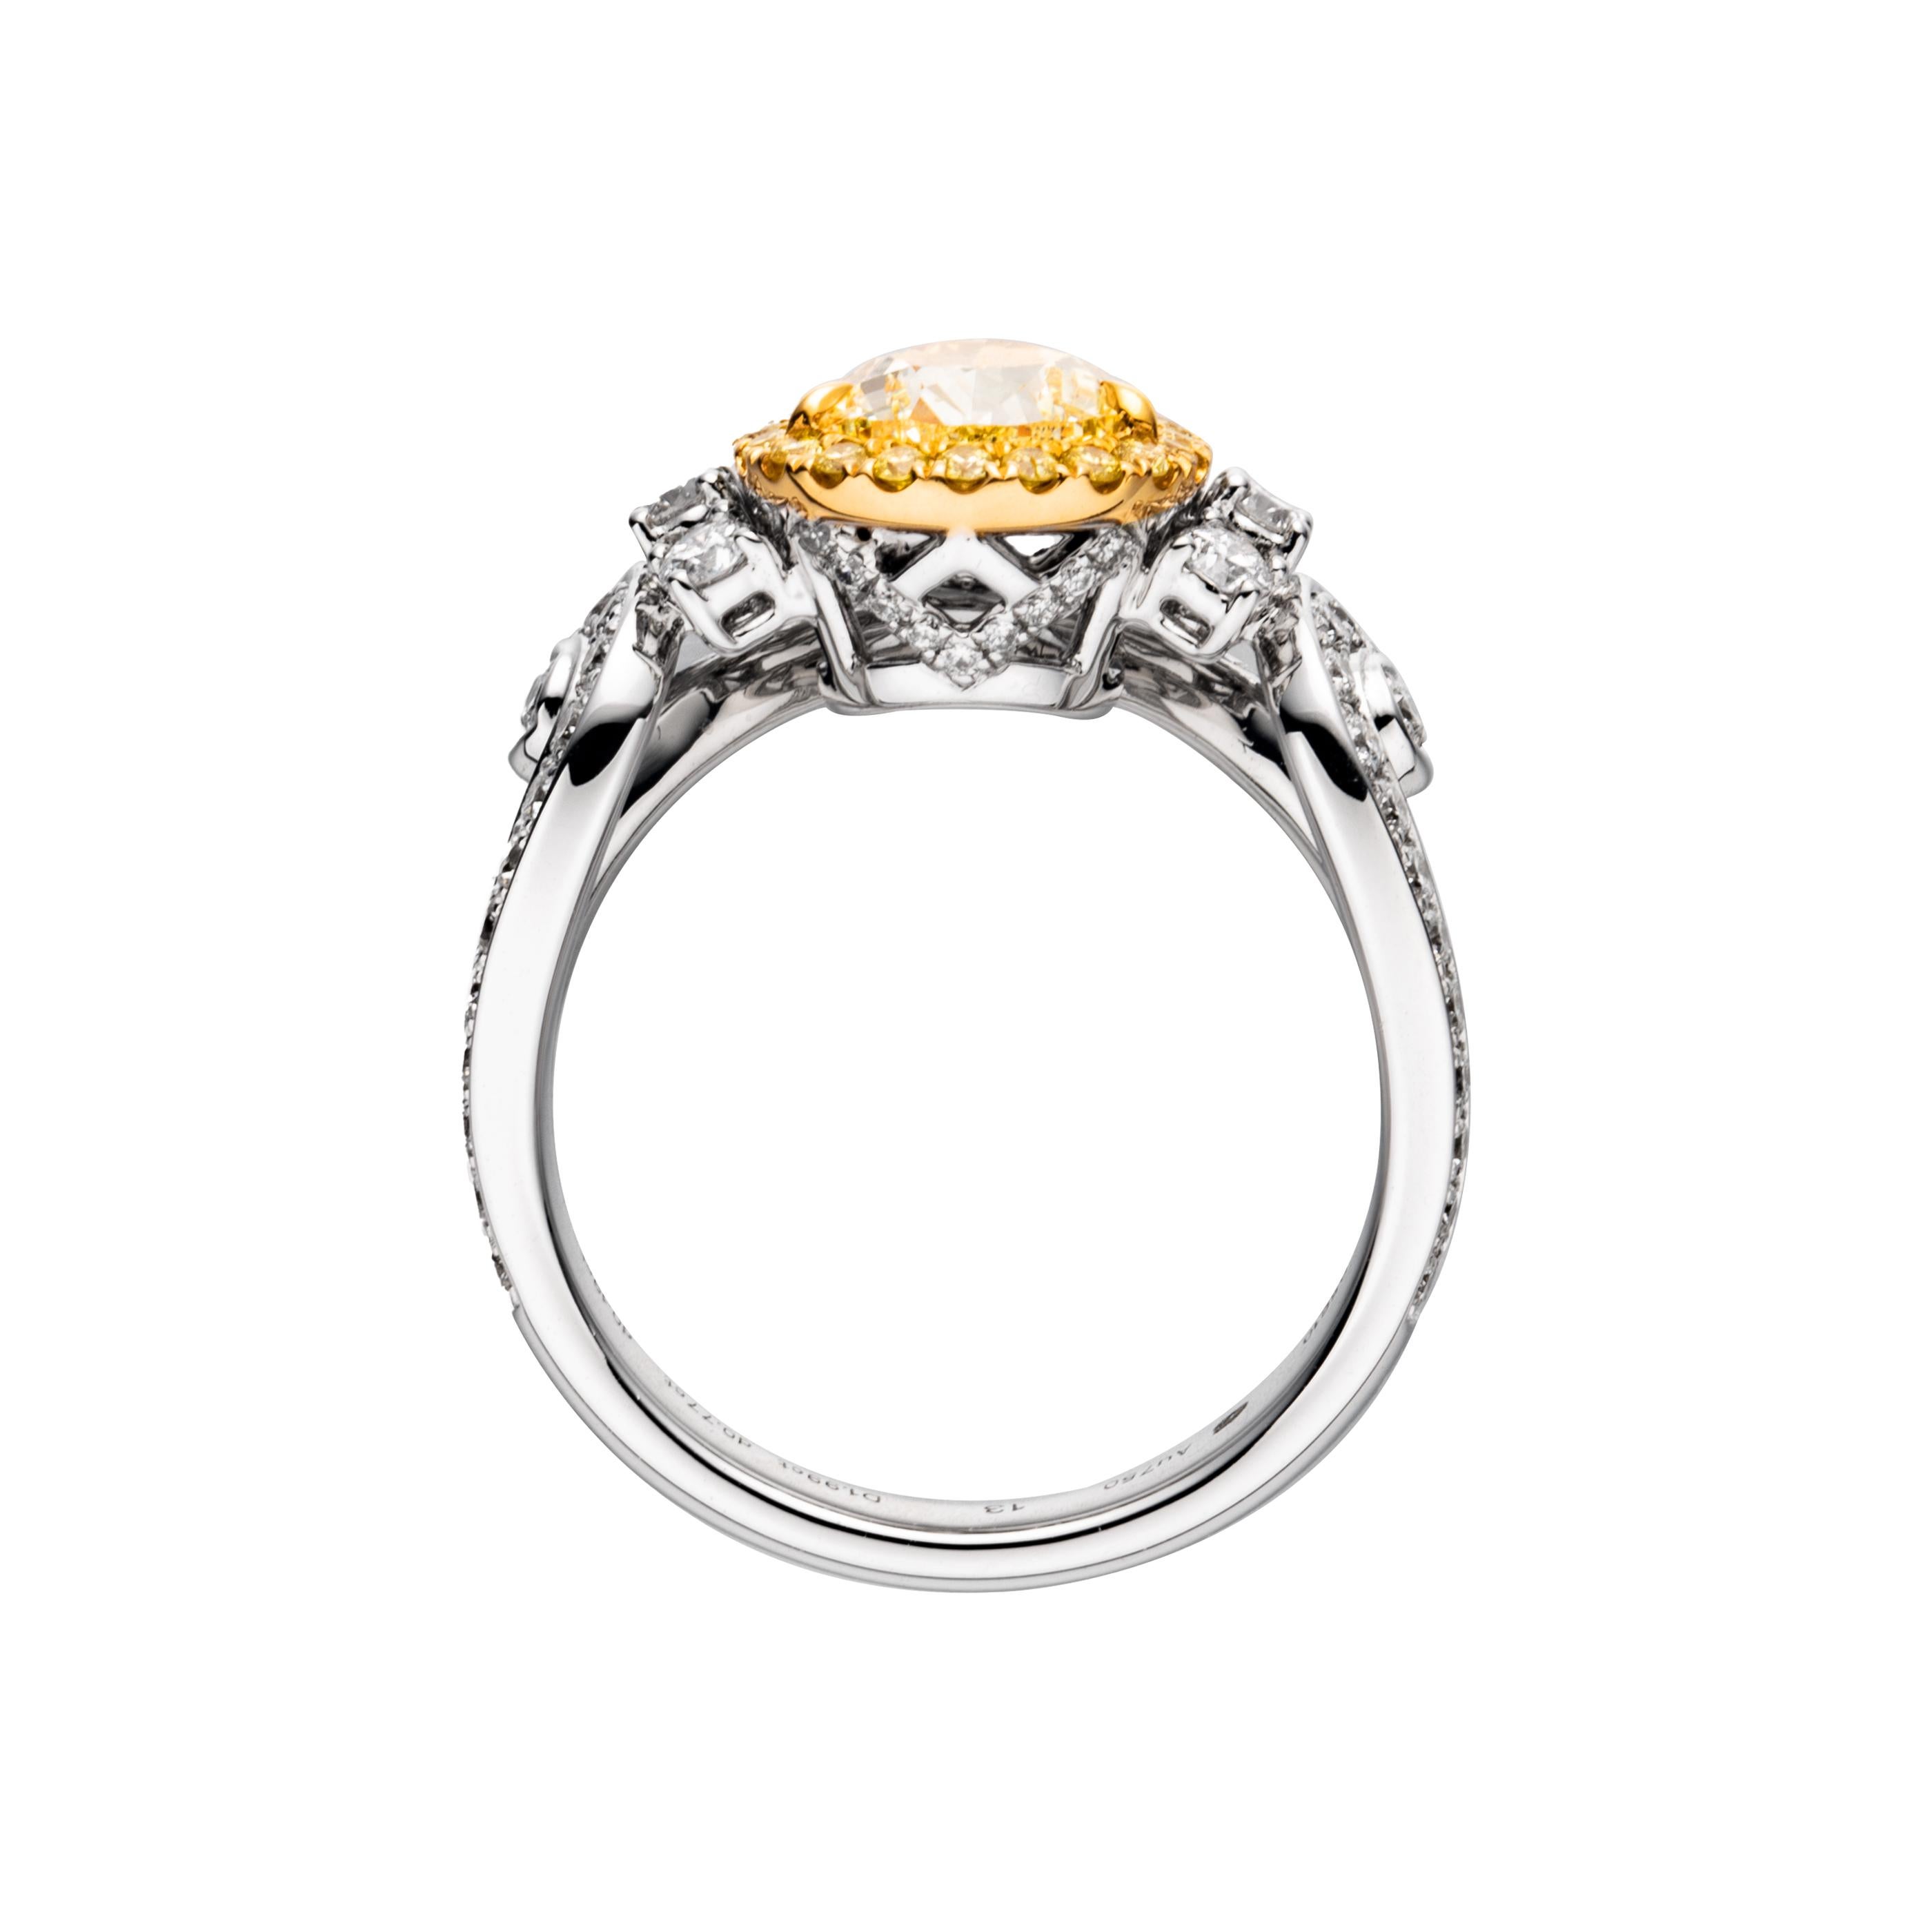 1.99 carat diamond ring